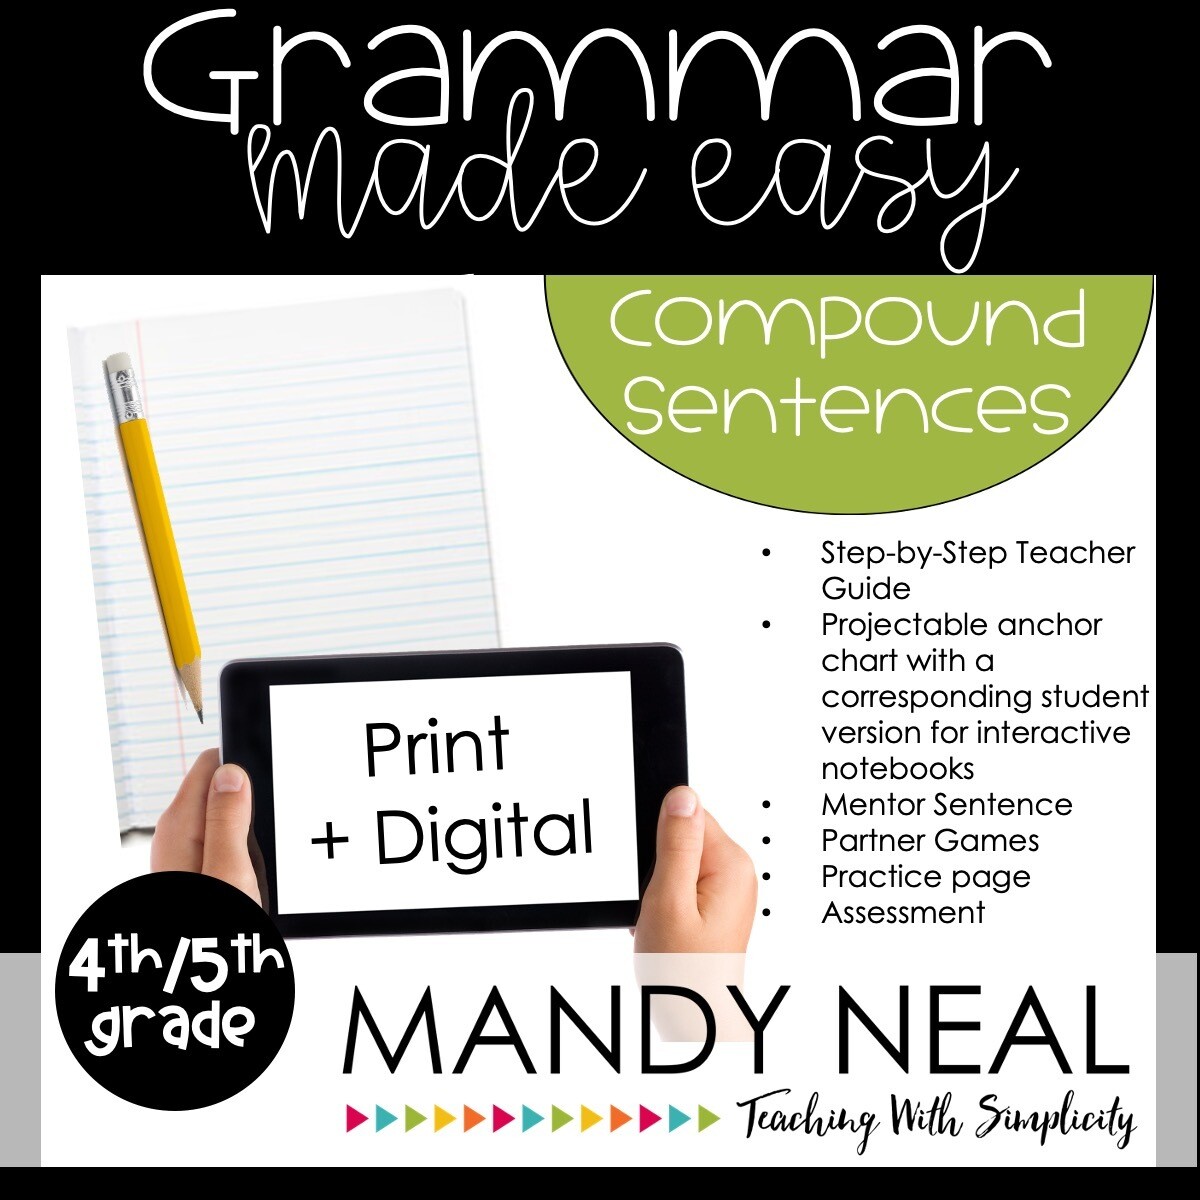 Print + Digital Fourth and Fifth Grade Grammar Activities (Compound Sentences)